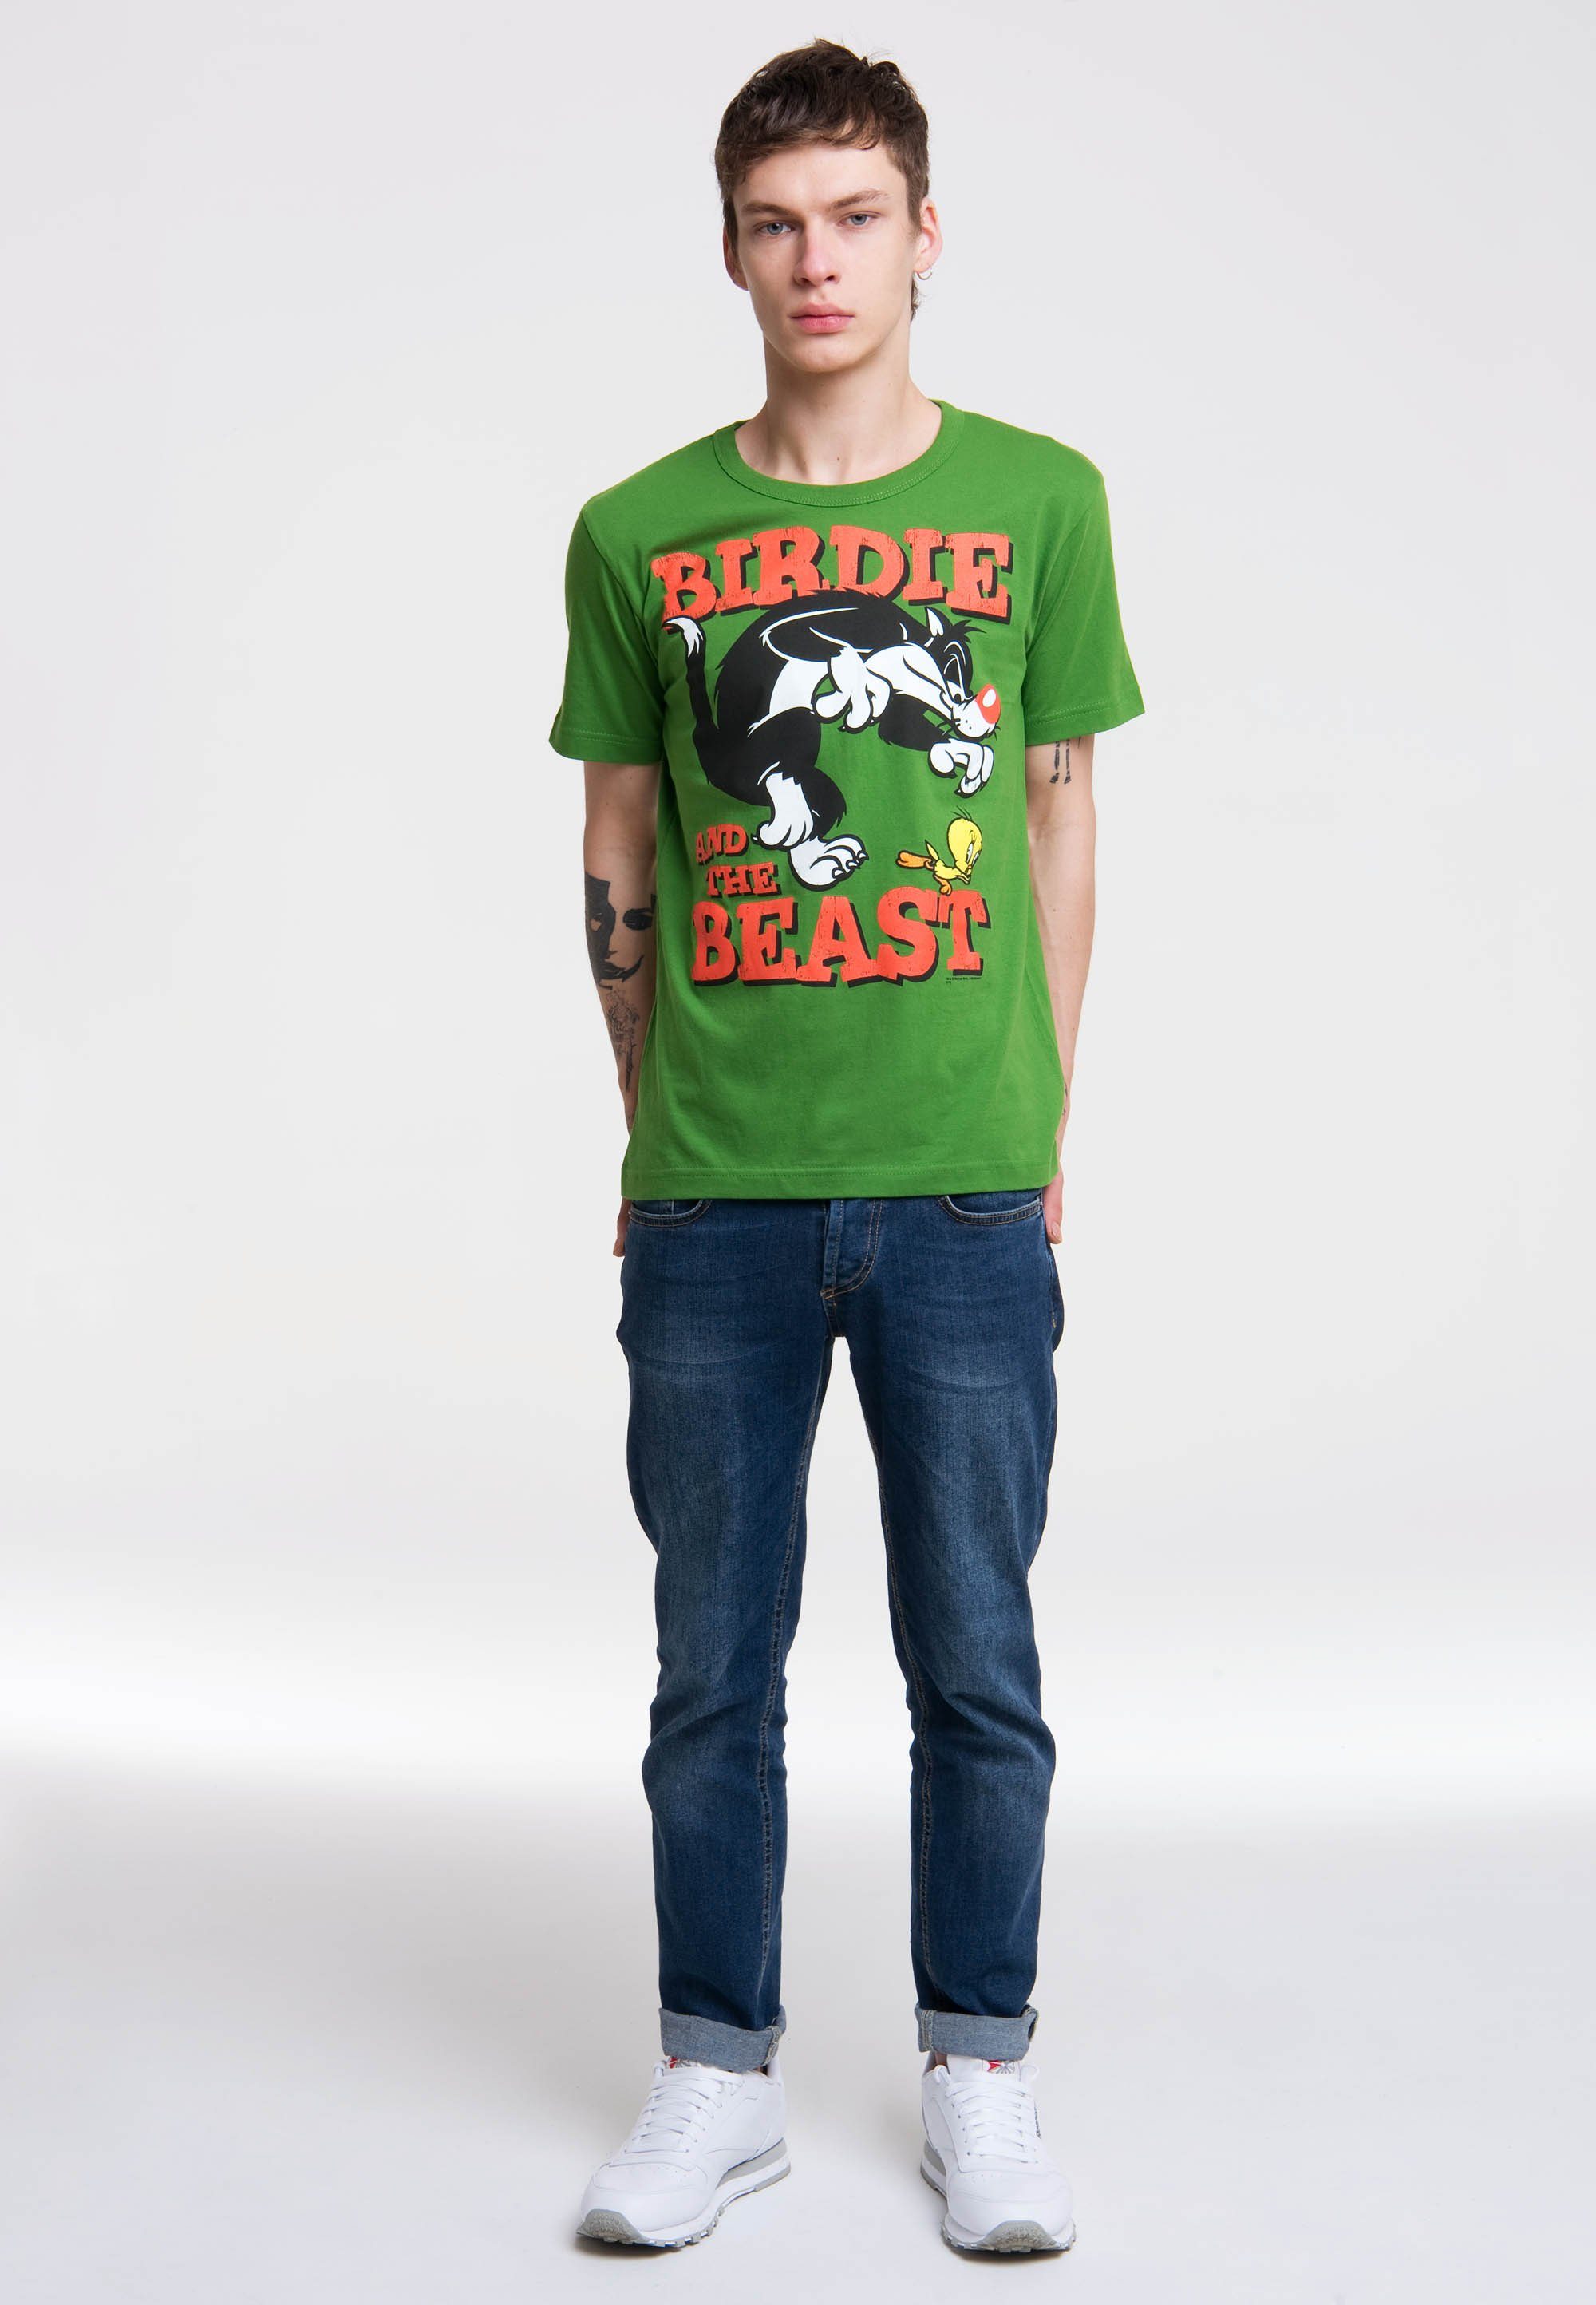 & olivgrün-grün LOGOSHIRT lizenziertem Sylvester T-Shirt mit Tweety Originaldesign